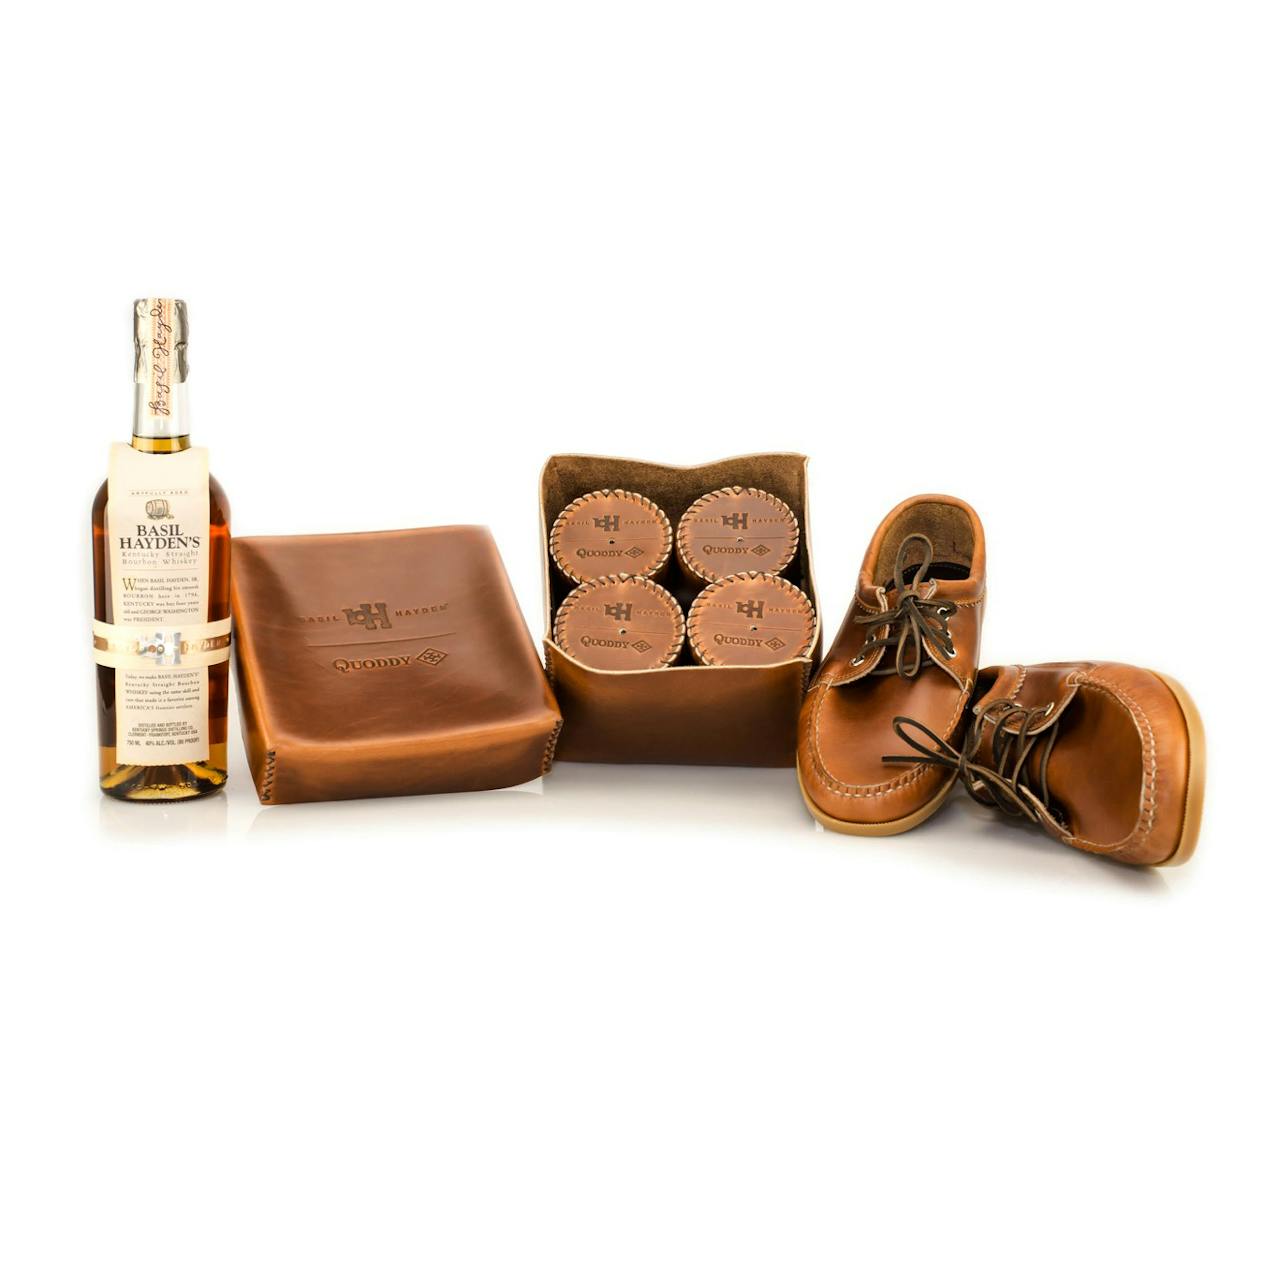 Basil Hayden’s Bourbon & Quoddy Limited Edition Drinking Shoe Gift Set